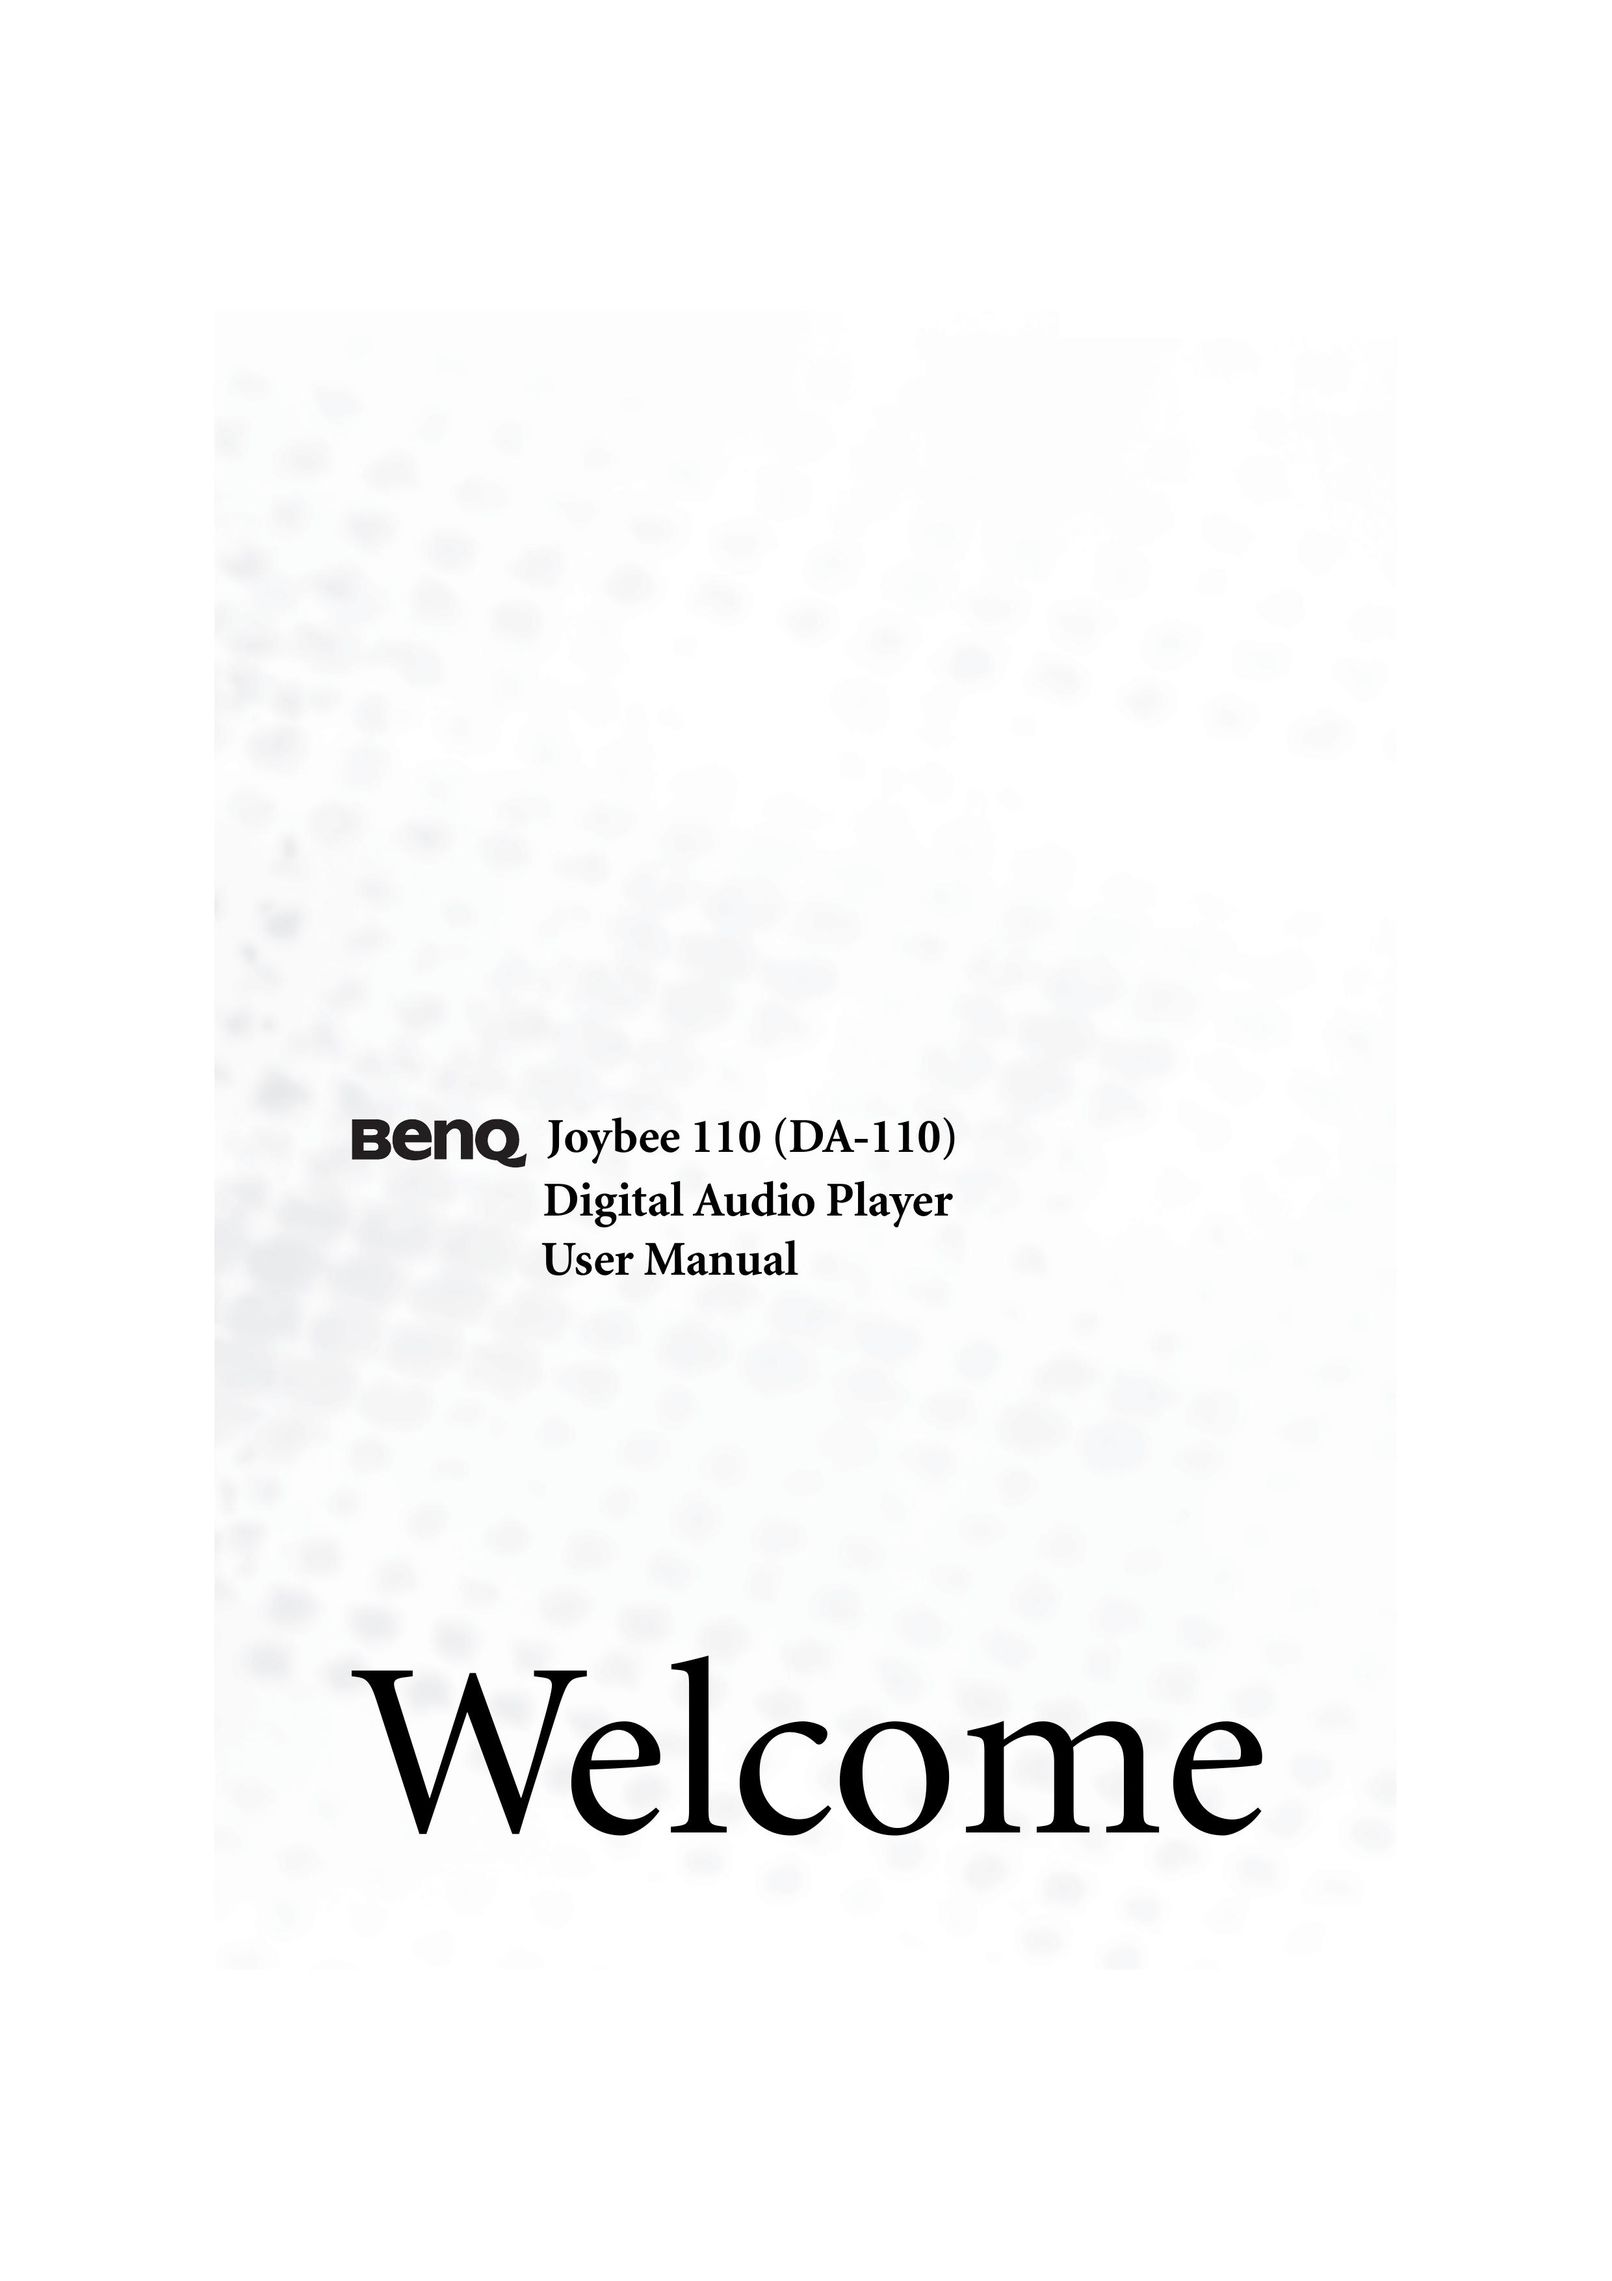 BenQ C110 MP3 Player User Manual